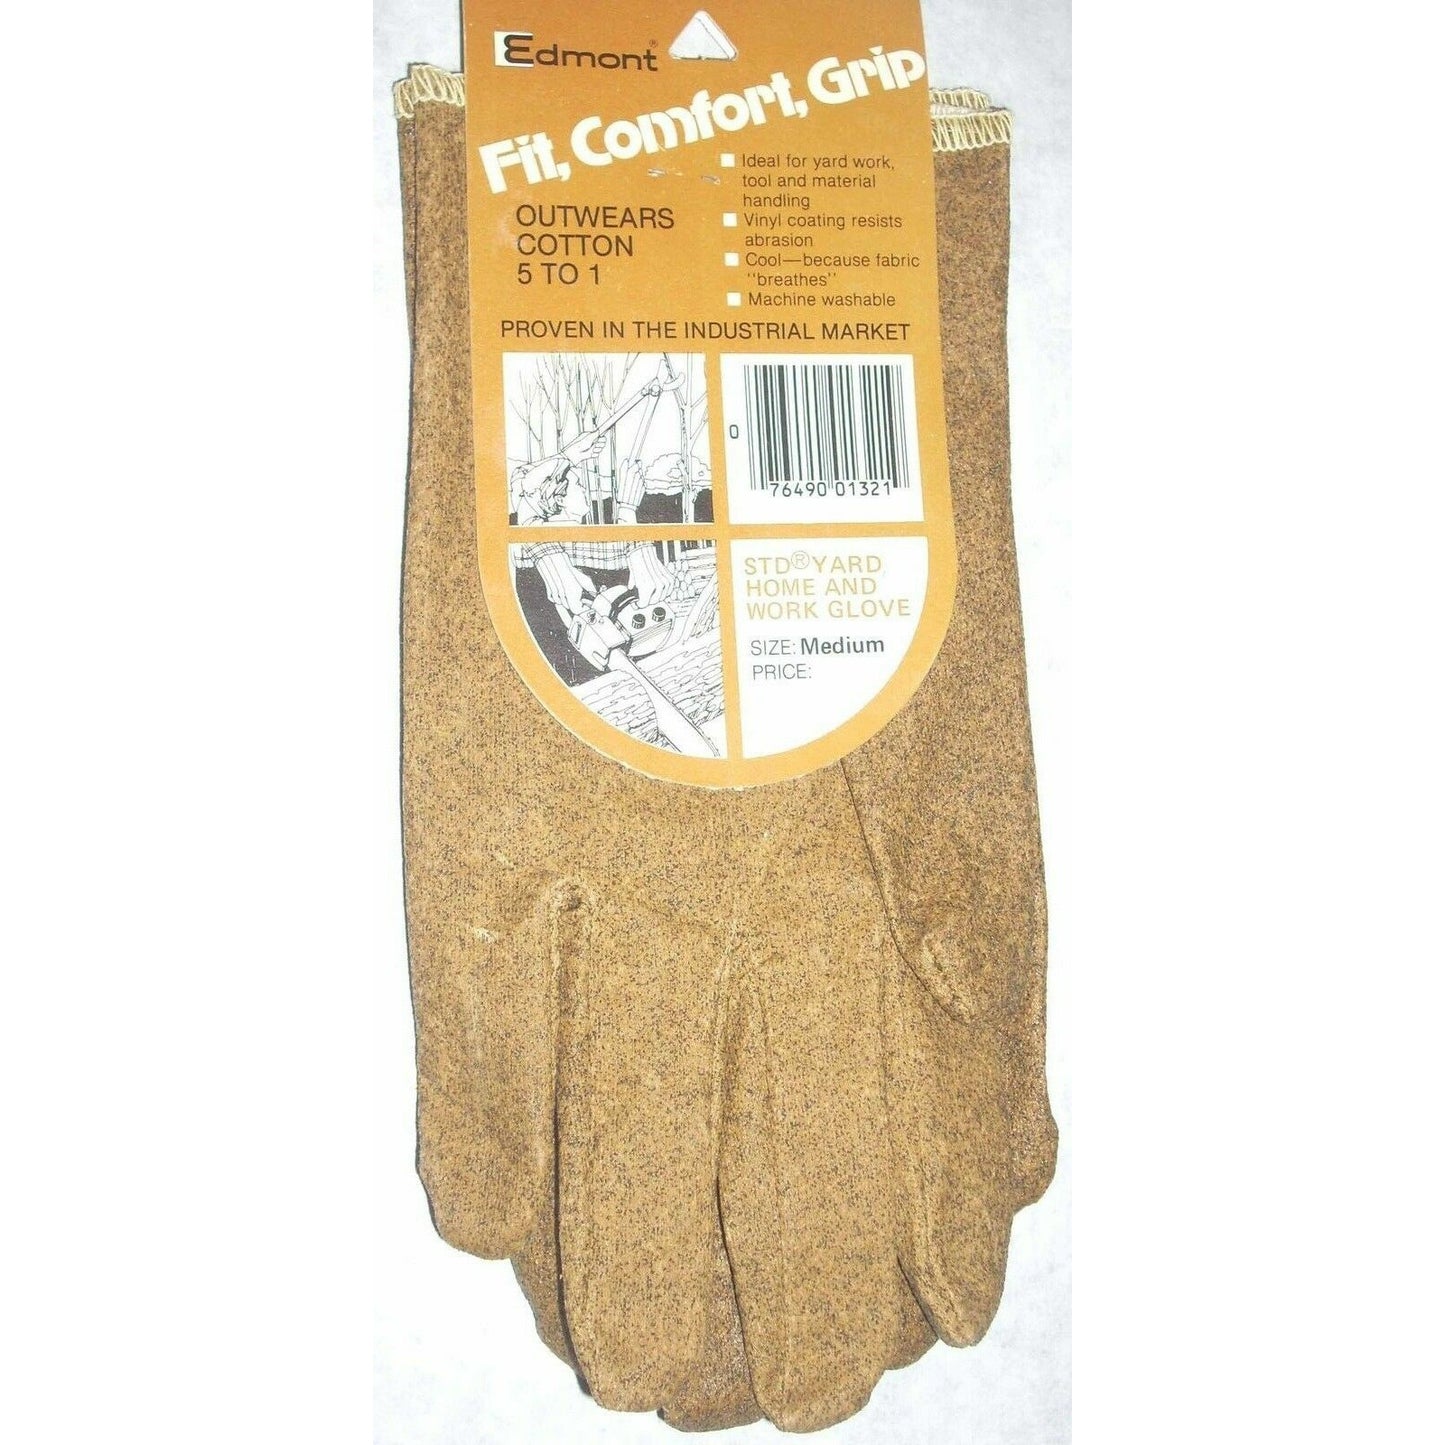 Edmont 1-134T Std Yard, Home & Work Gloves Vinyl Coated Medium Comfort Grip